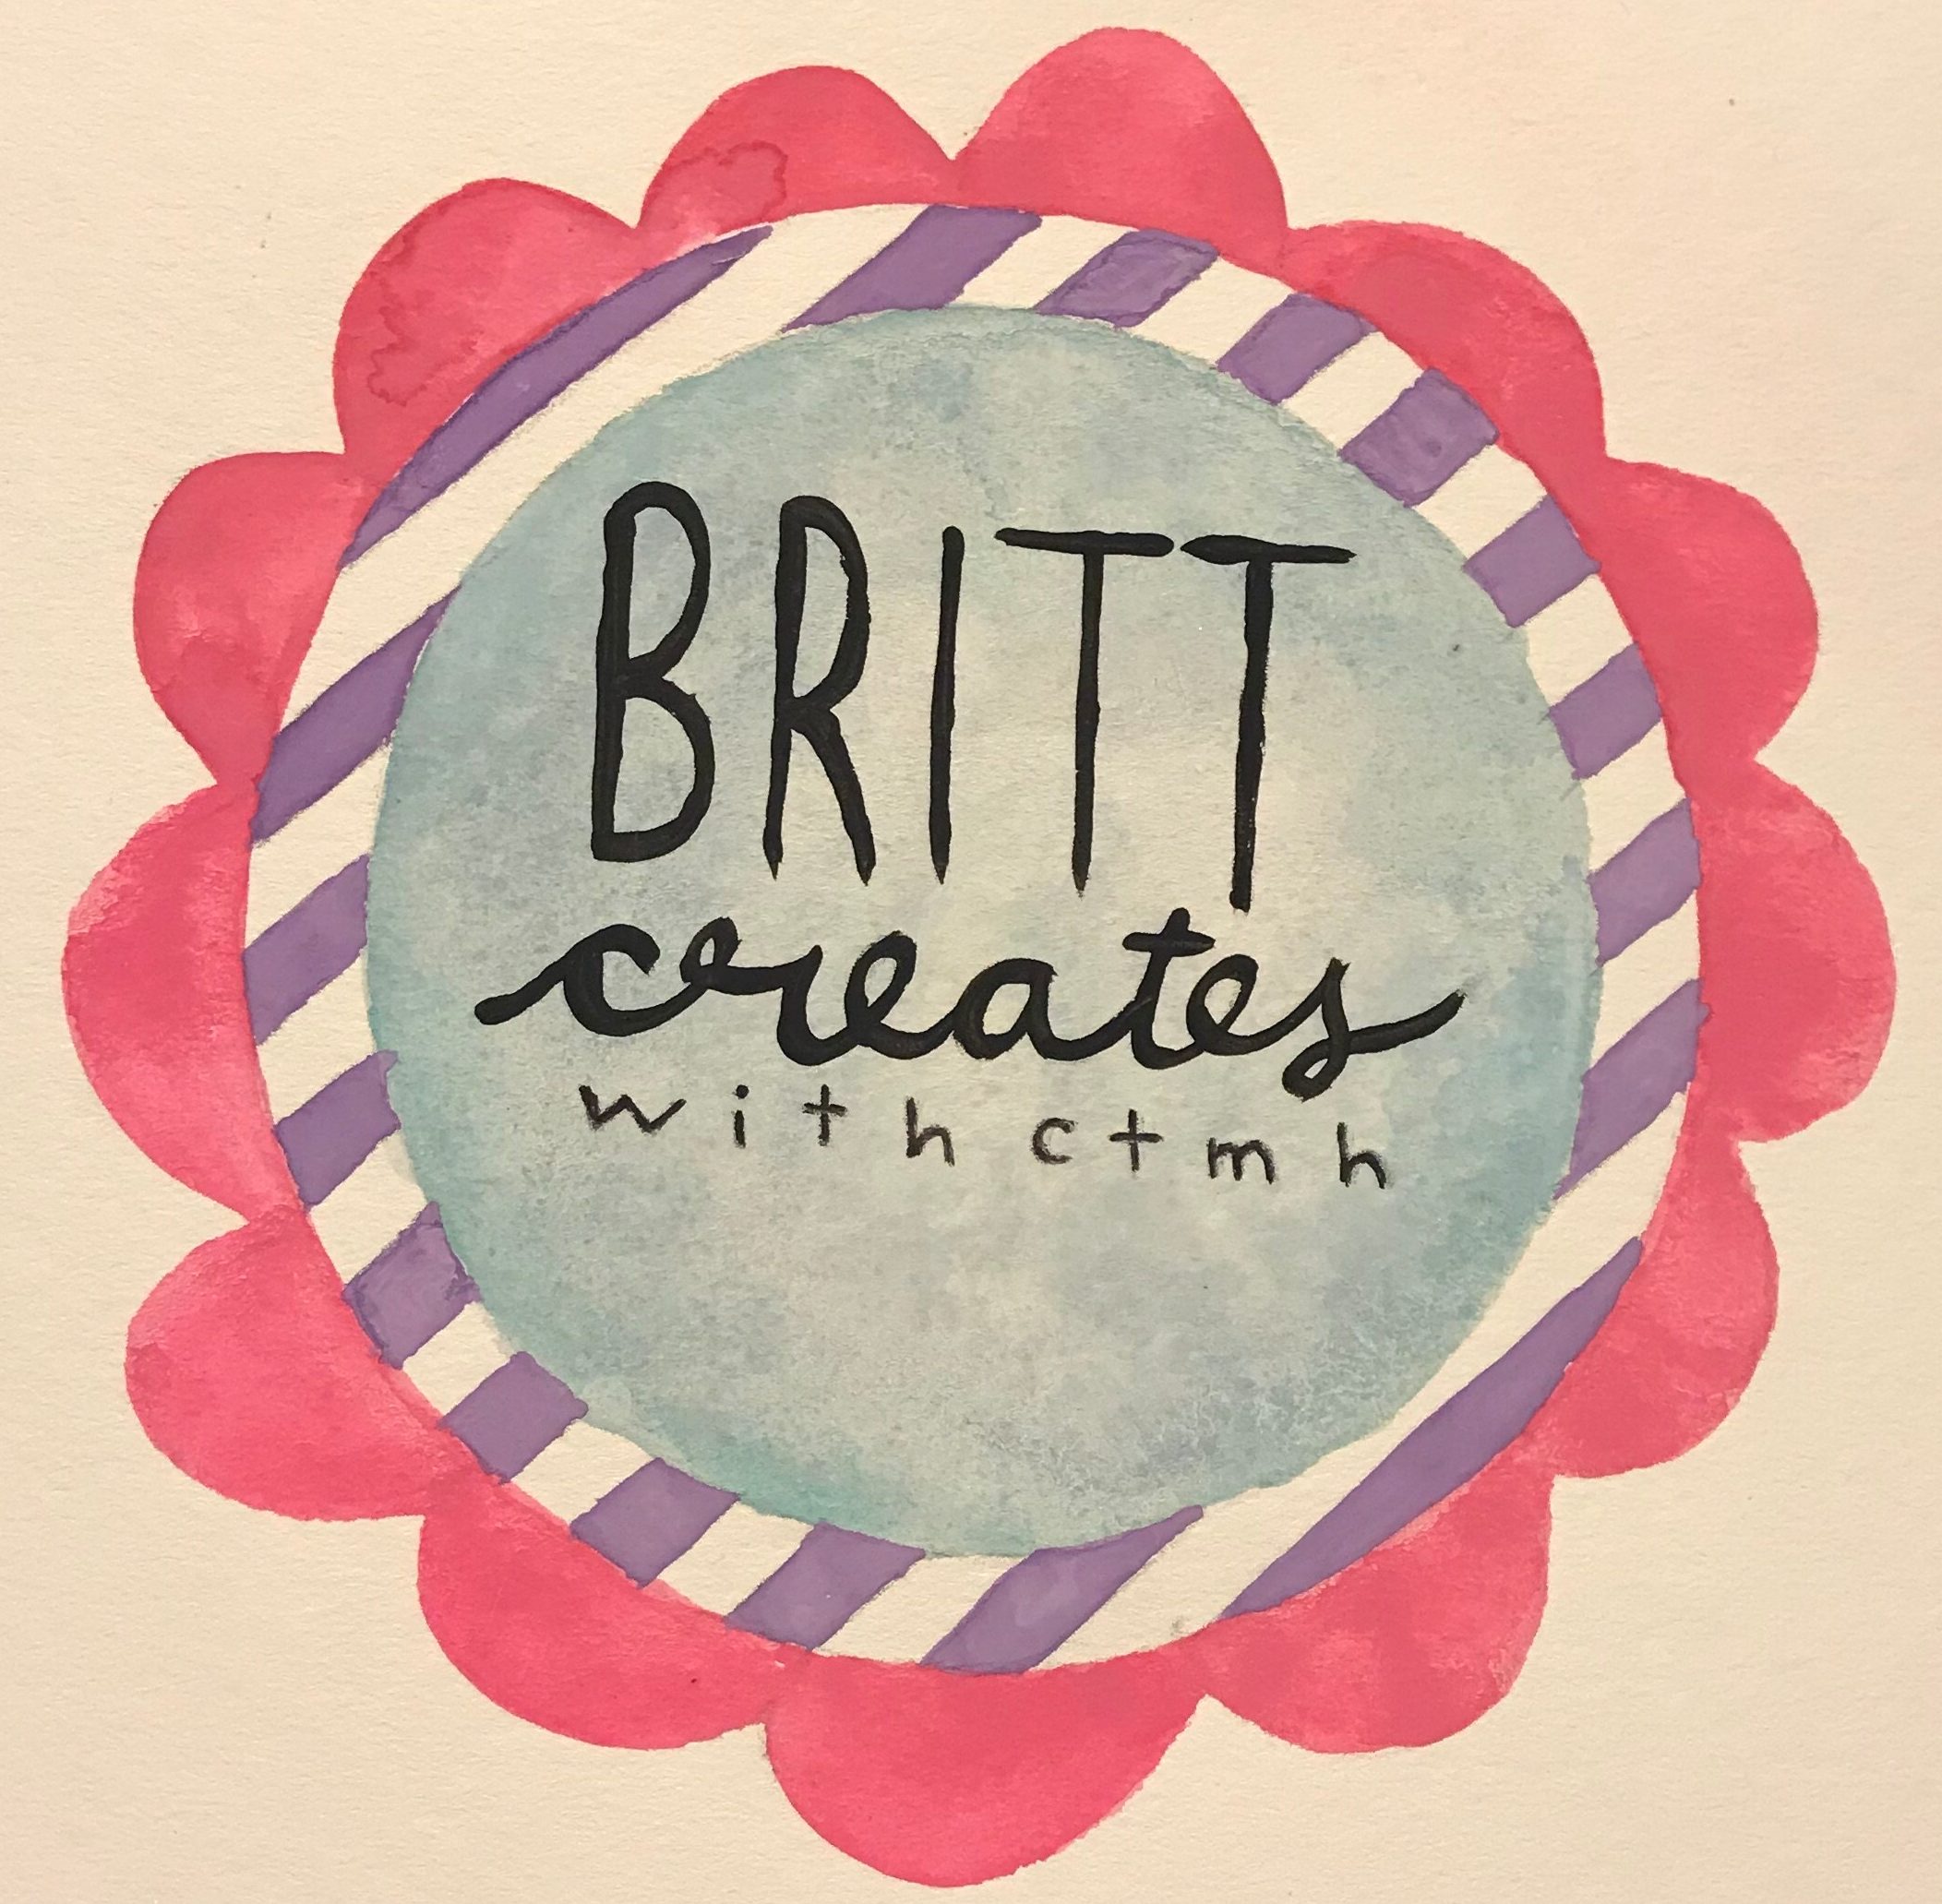 Britt Creates with CTMH